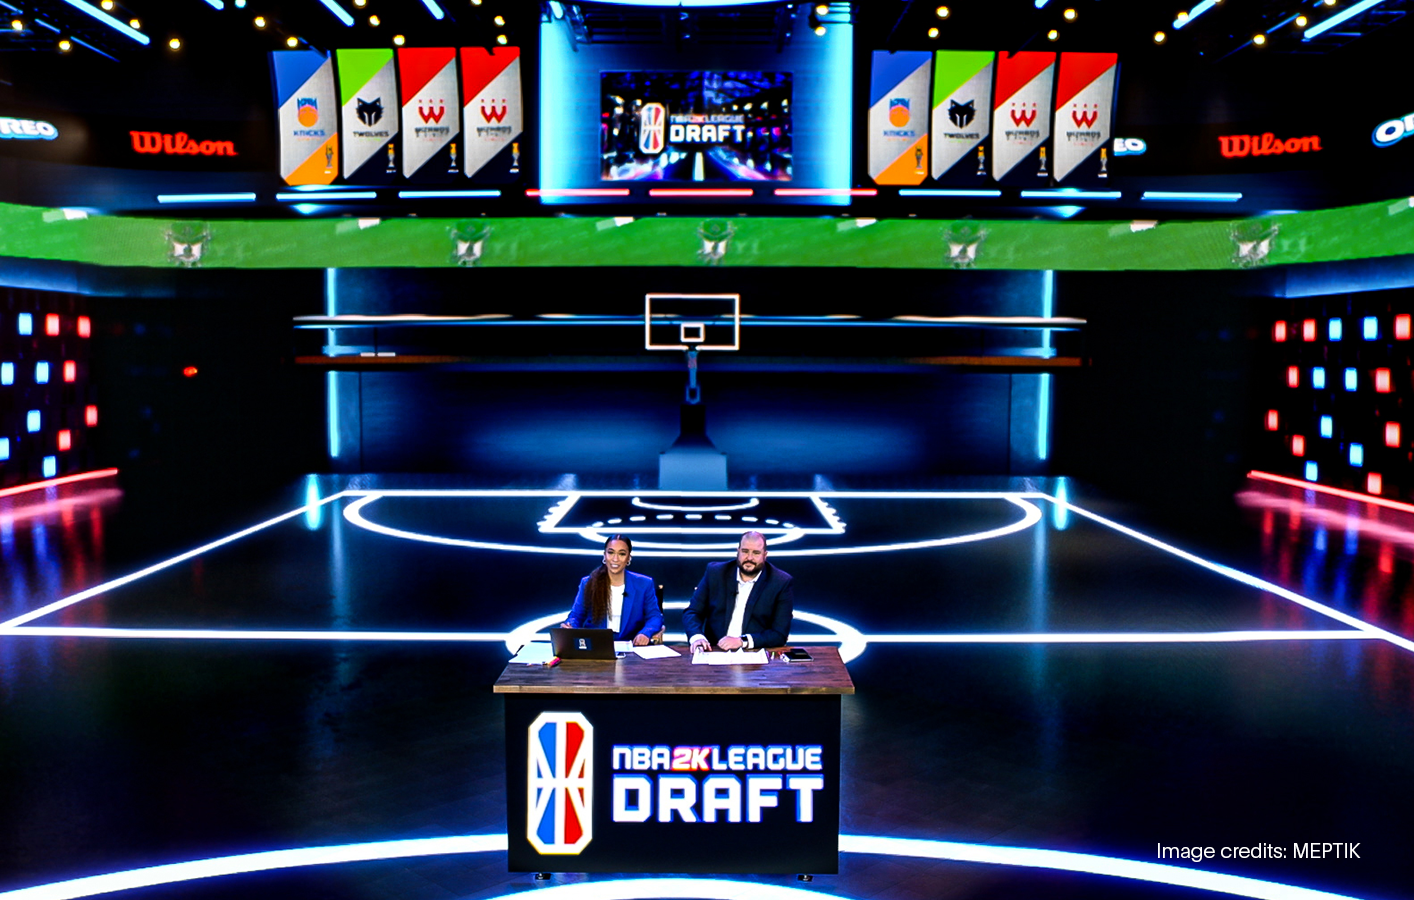 NBA 2K League Draft livestream disguise